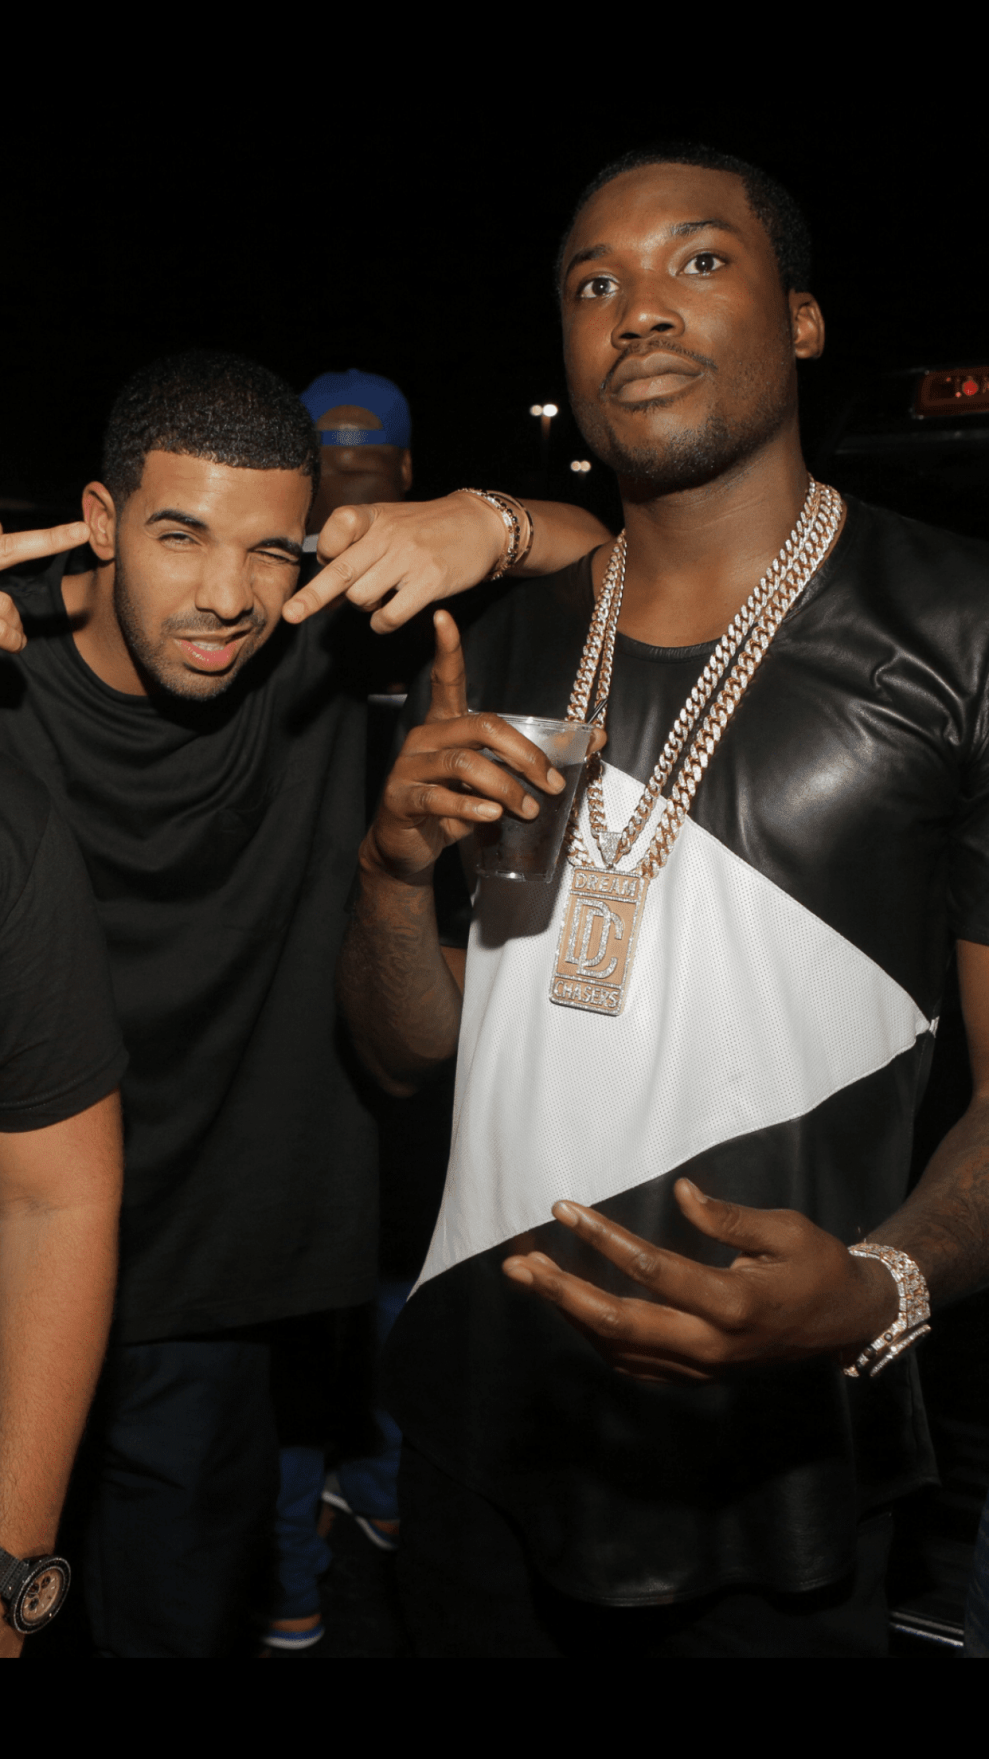 Drake and meek pose together